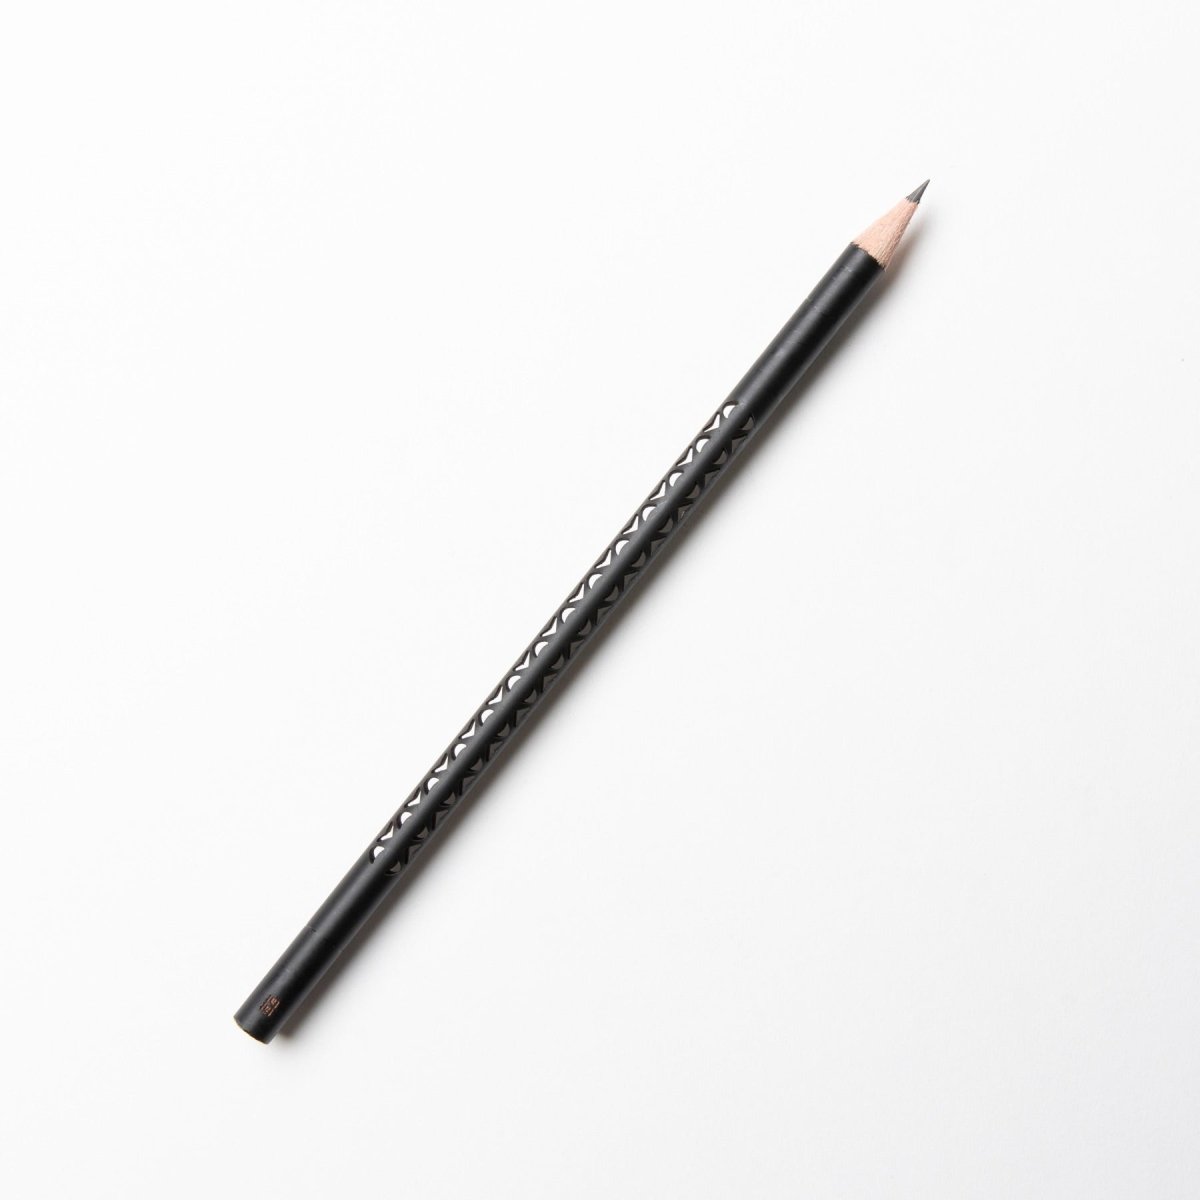 Tät-Tat - Bleistift Eiffel Pencil - Autotype Design Tools